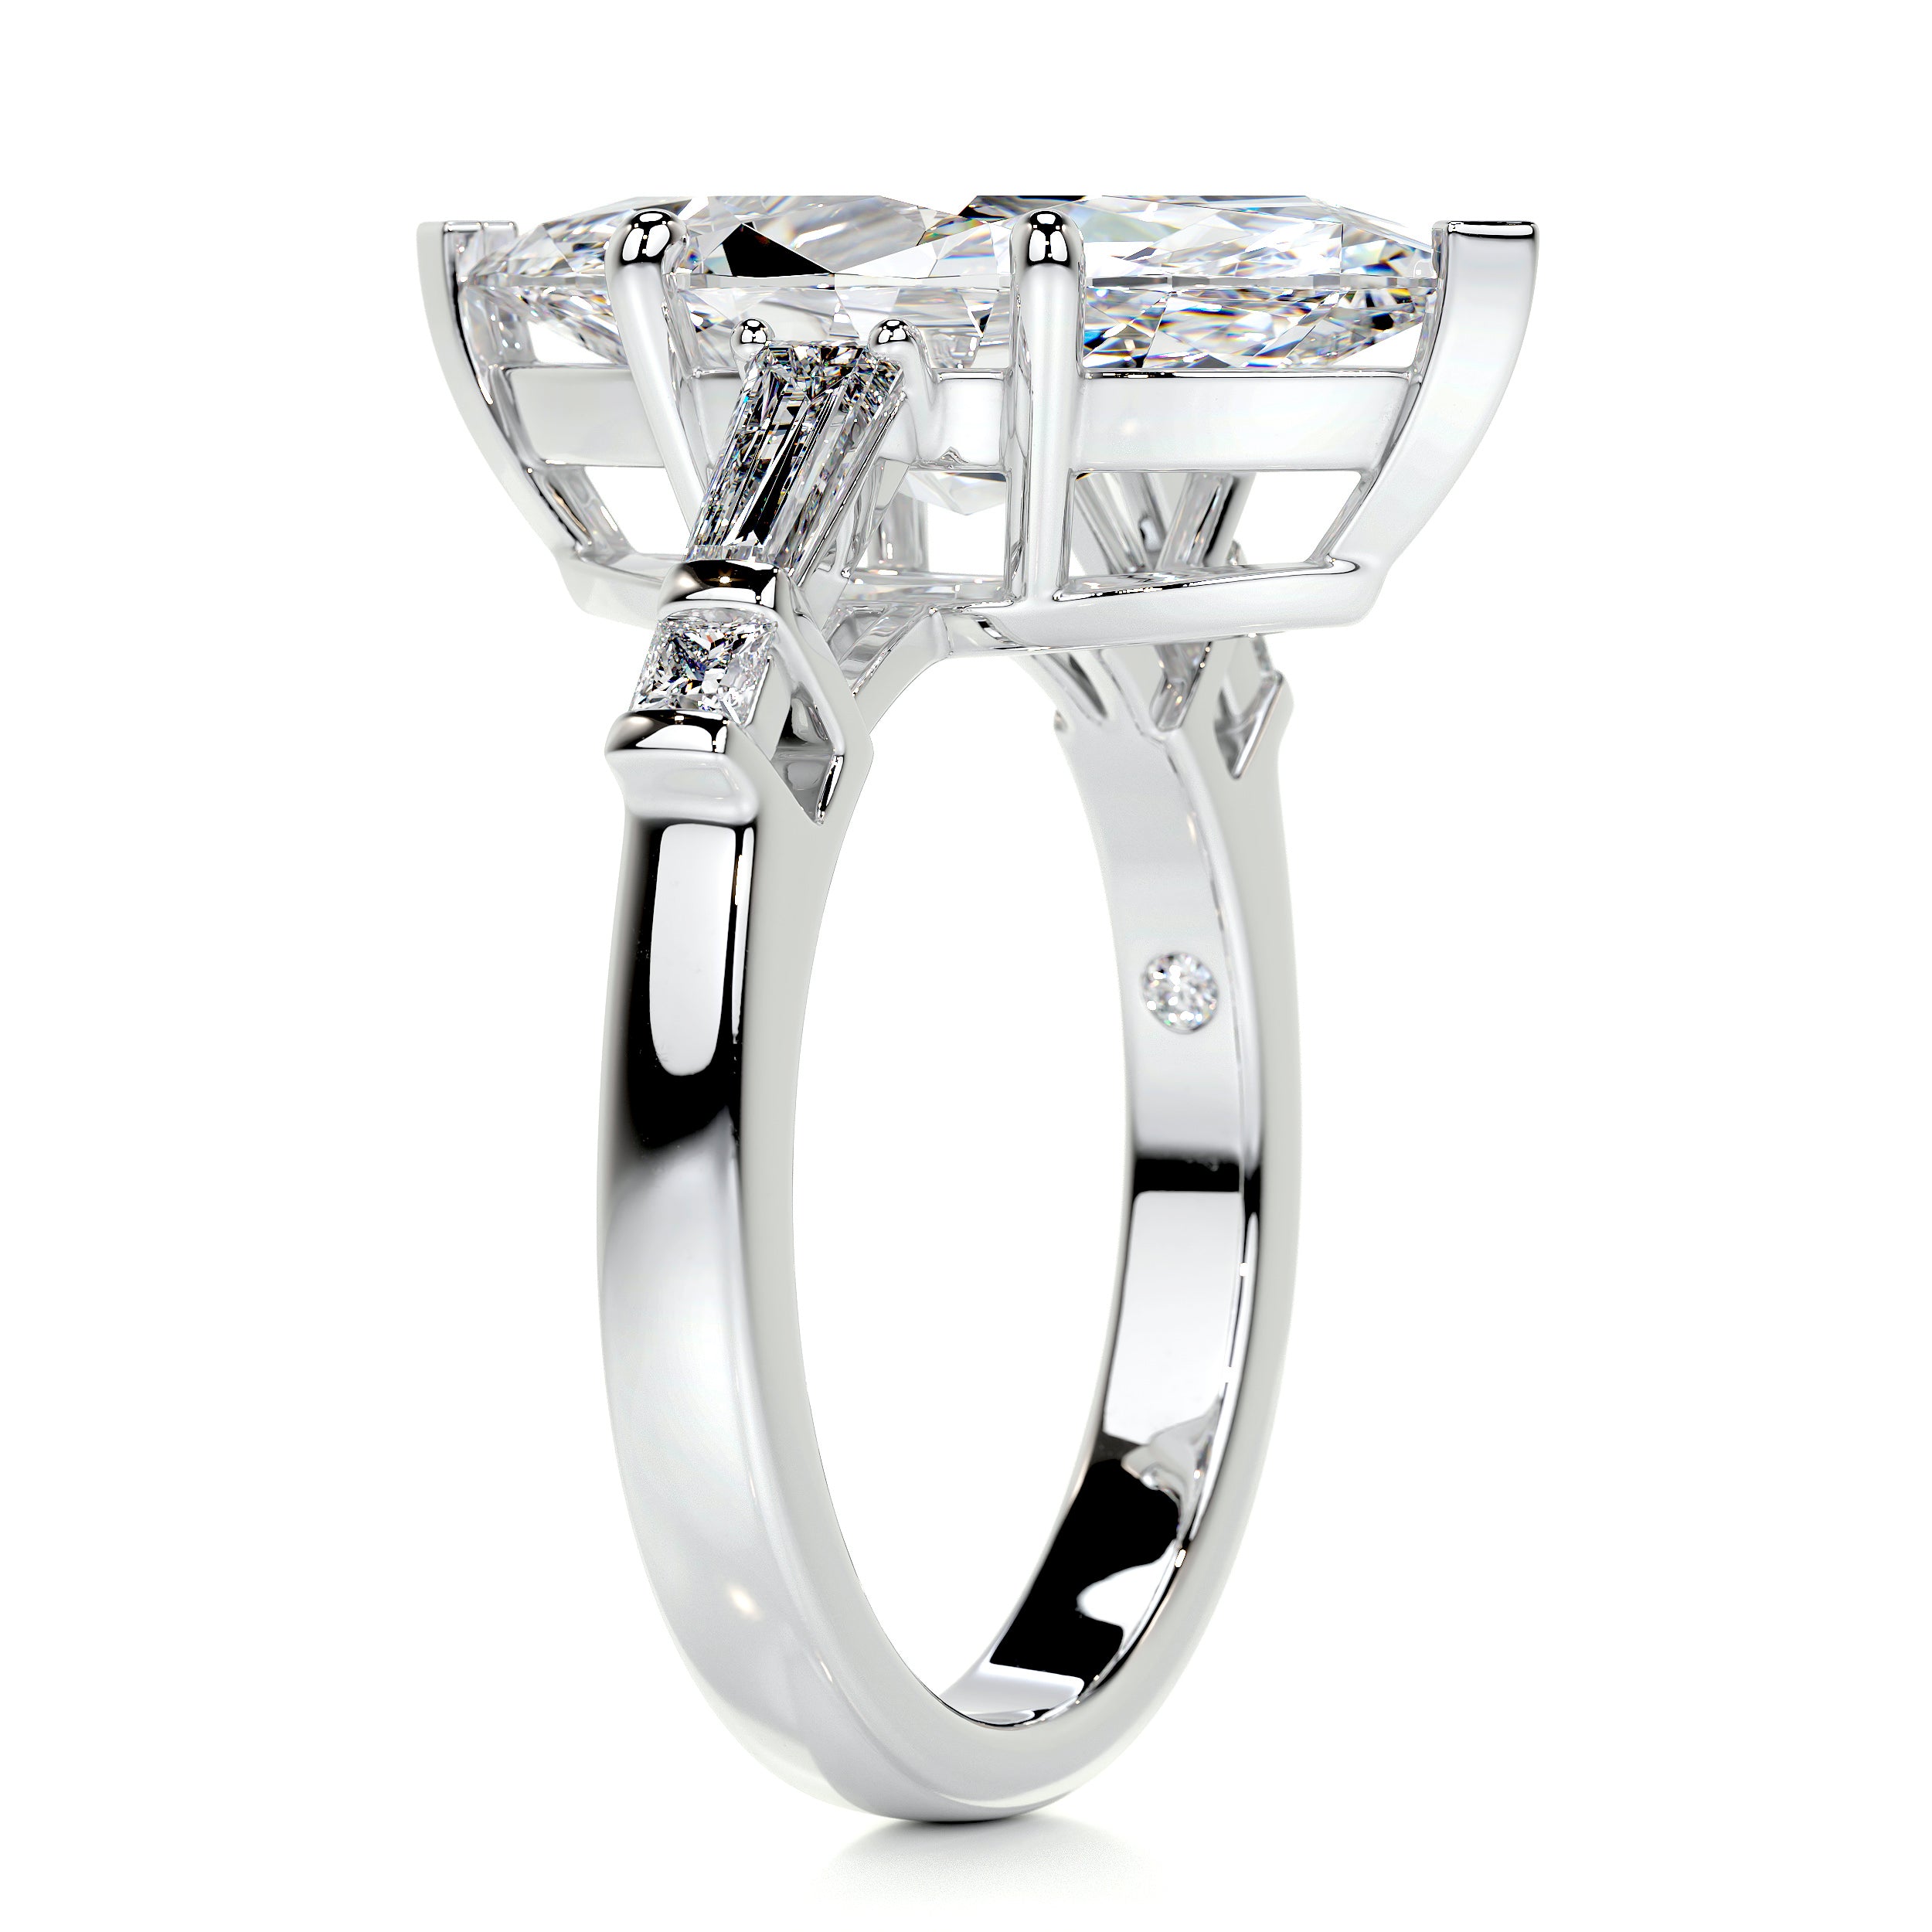 Tessa Diamond Engagement Ring   (5.3 Carat) -18K White Gold